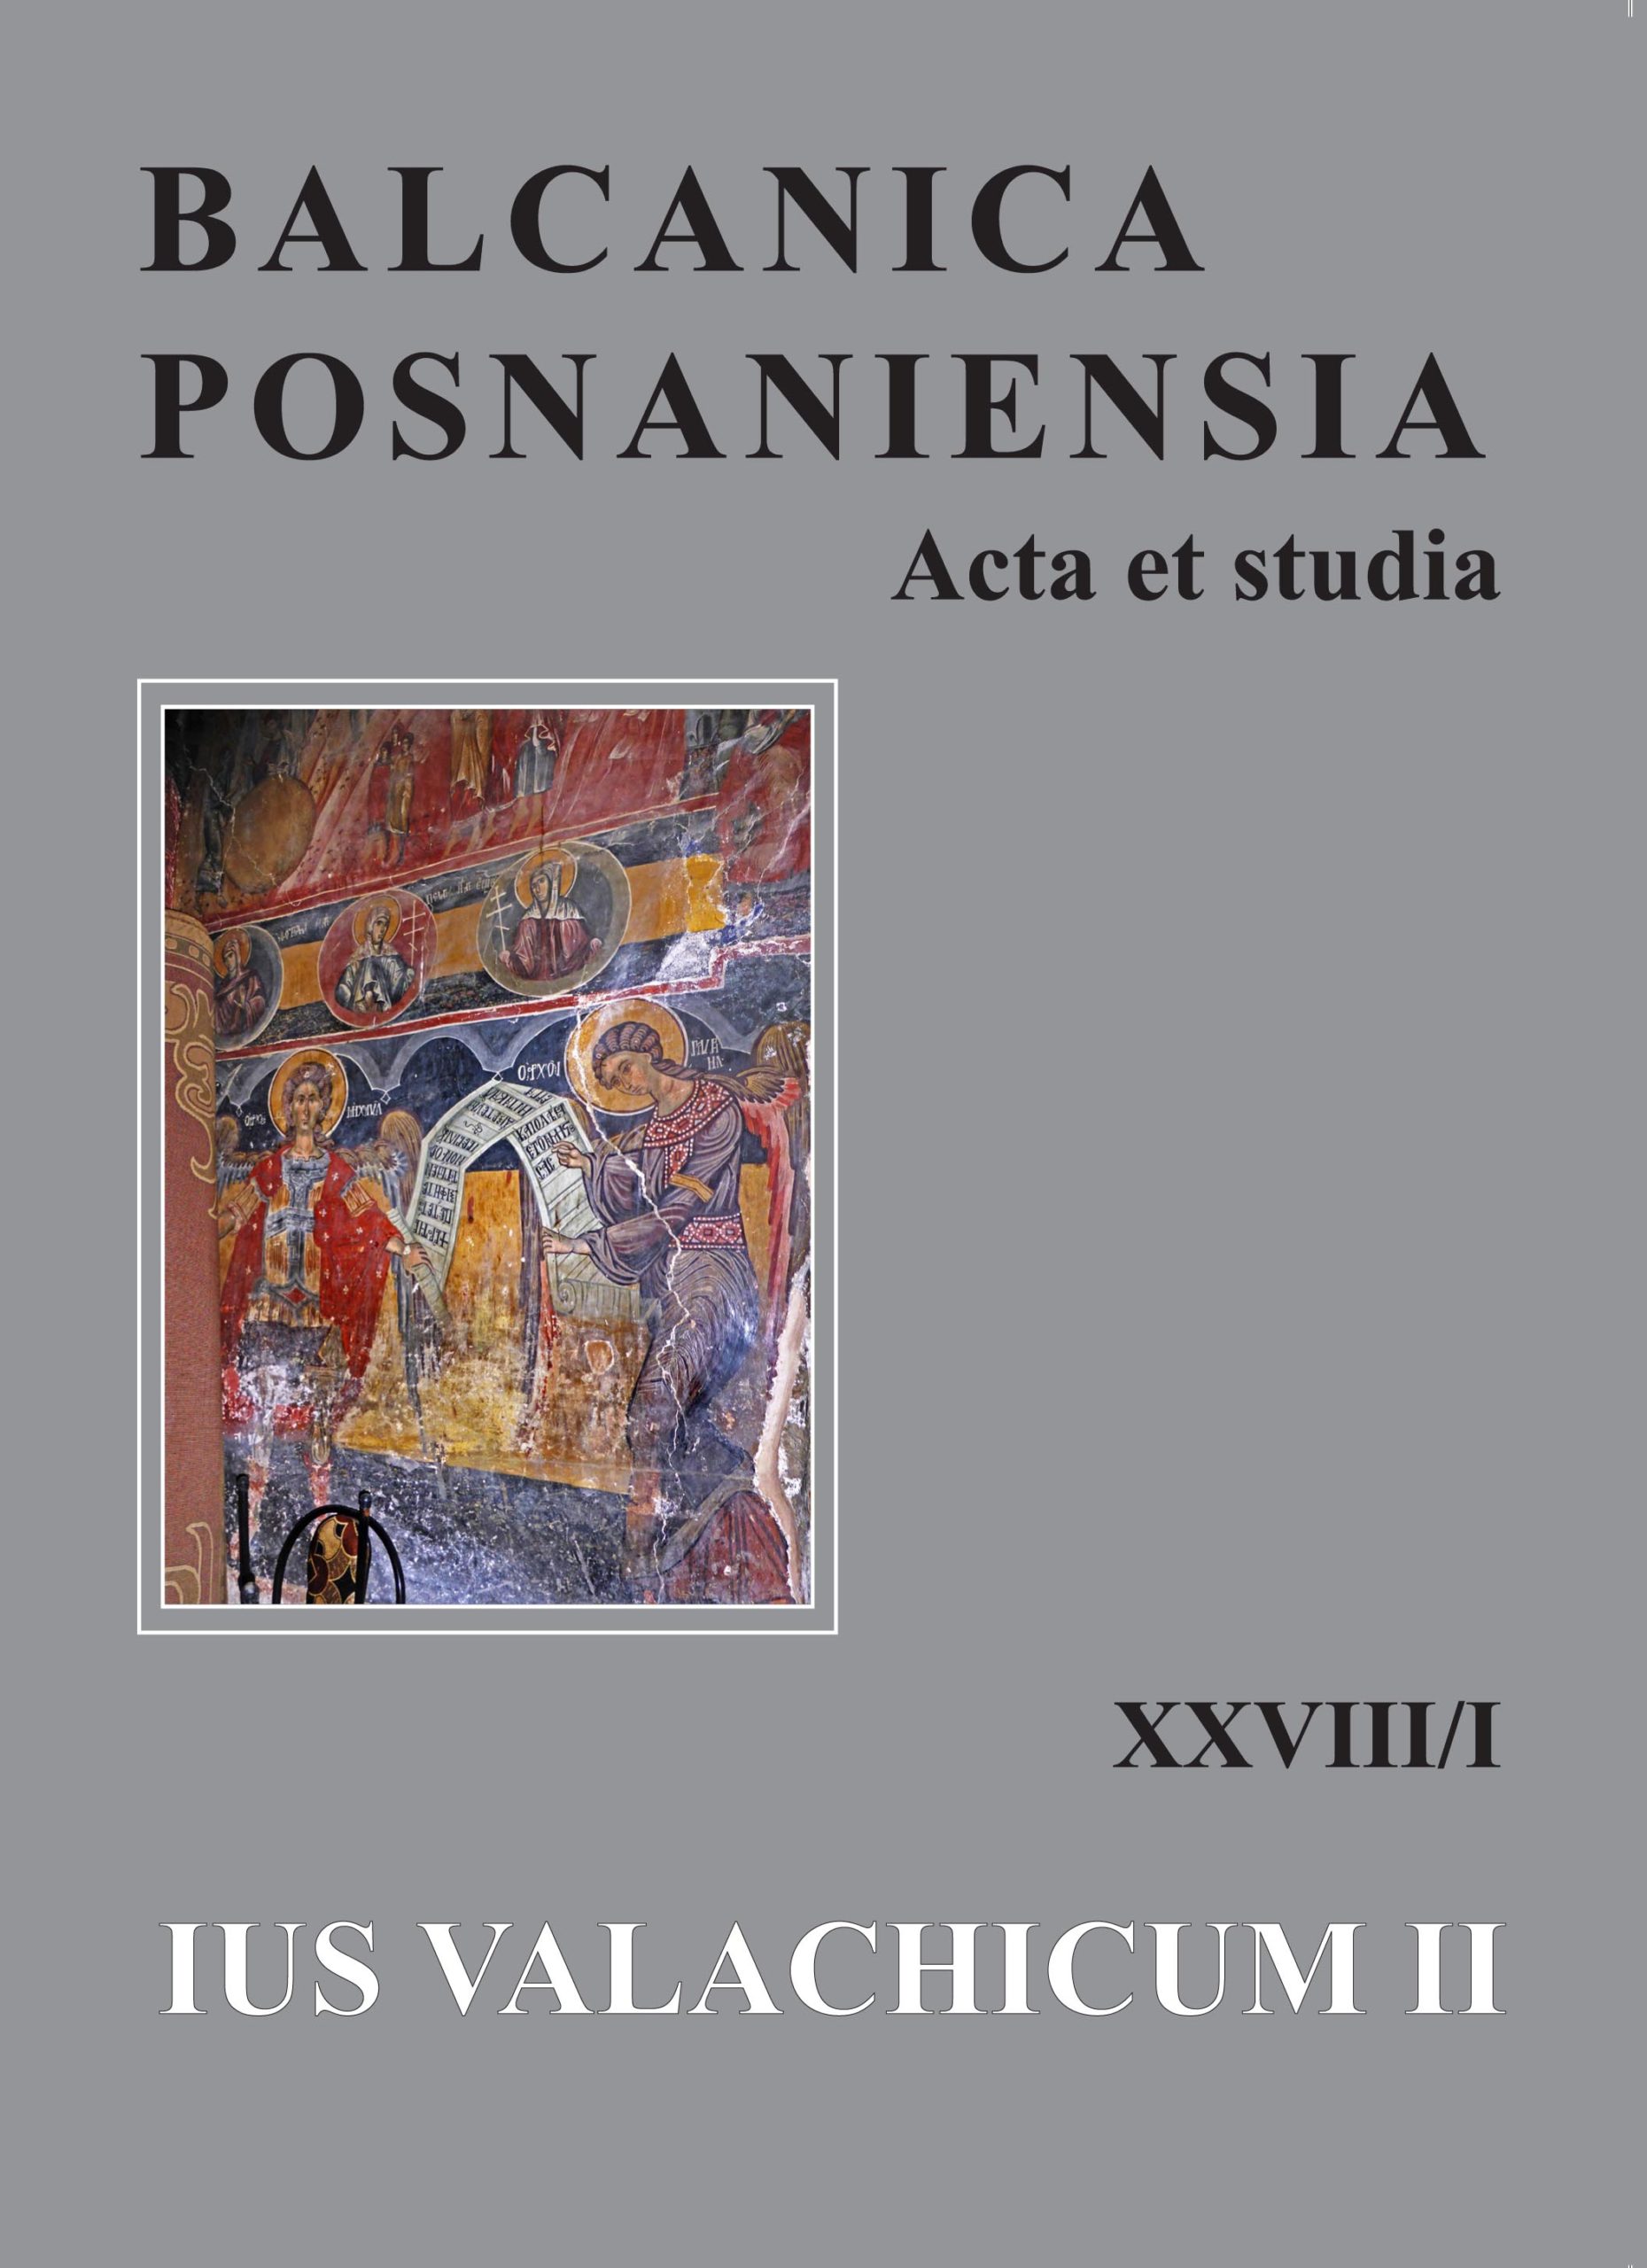 Studia Balcanica-Posnaniensia XXVIII/1 Ius Valachicum vol. II